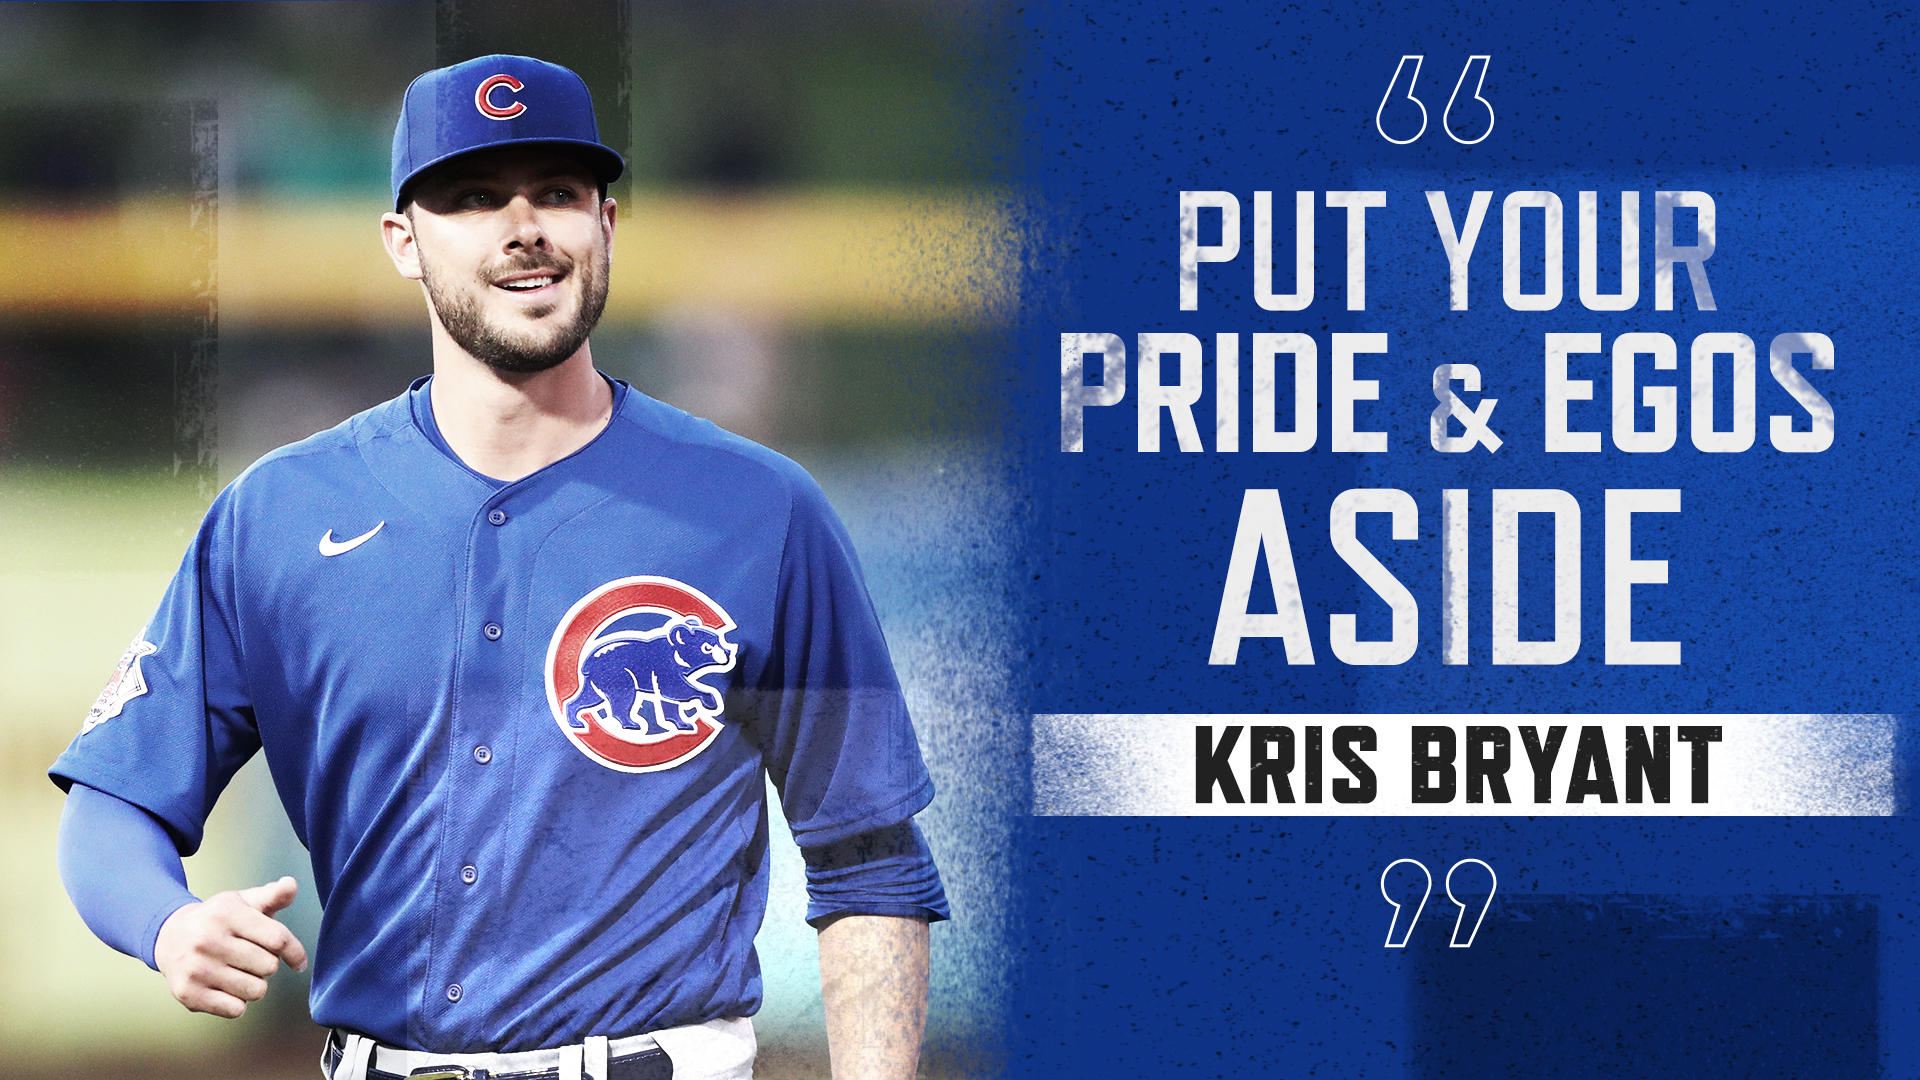 Kris Bryant, Cubs keep winning with health, baseball as